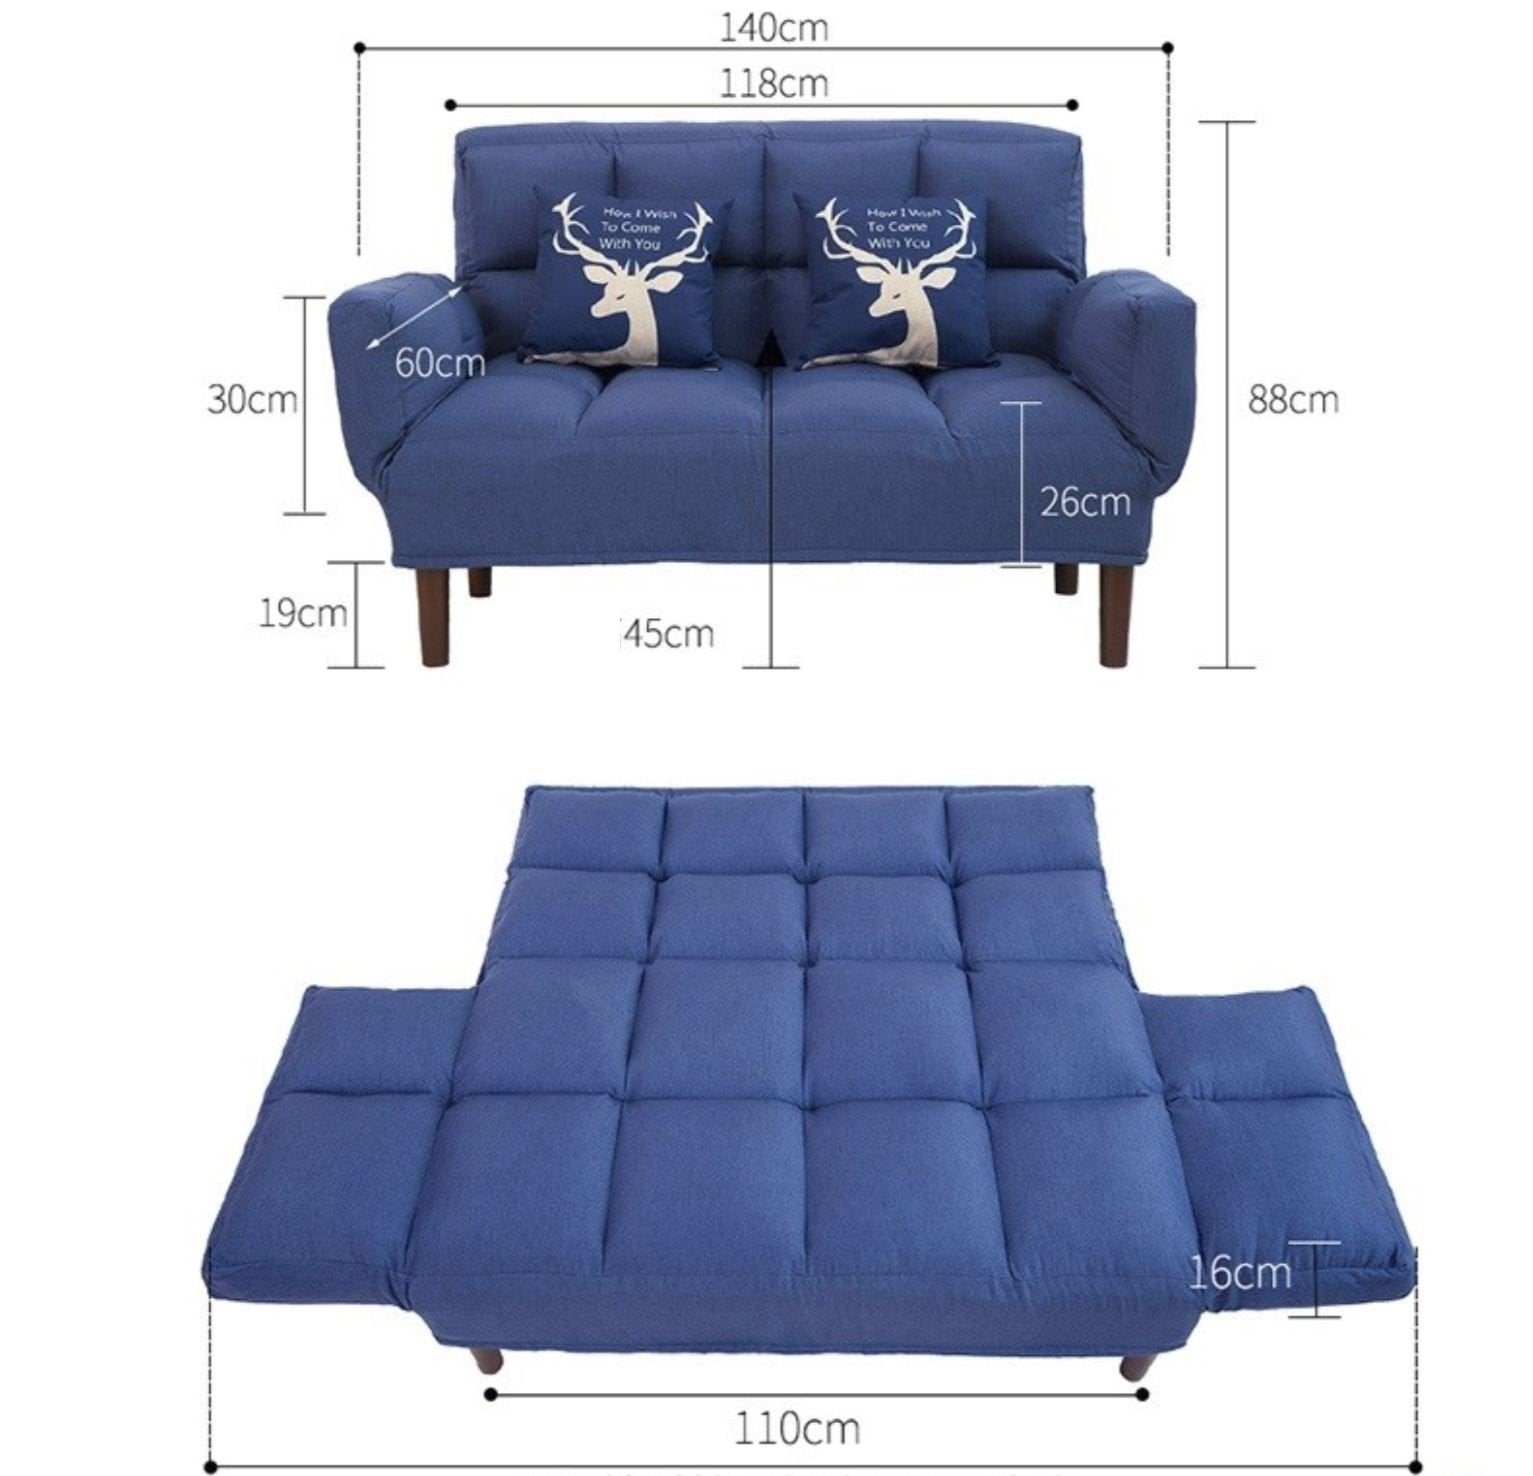 MATTEO Contemporary Compact Slim Sofa Bed